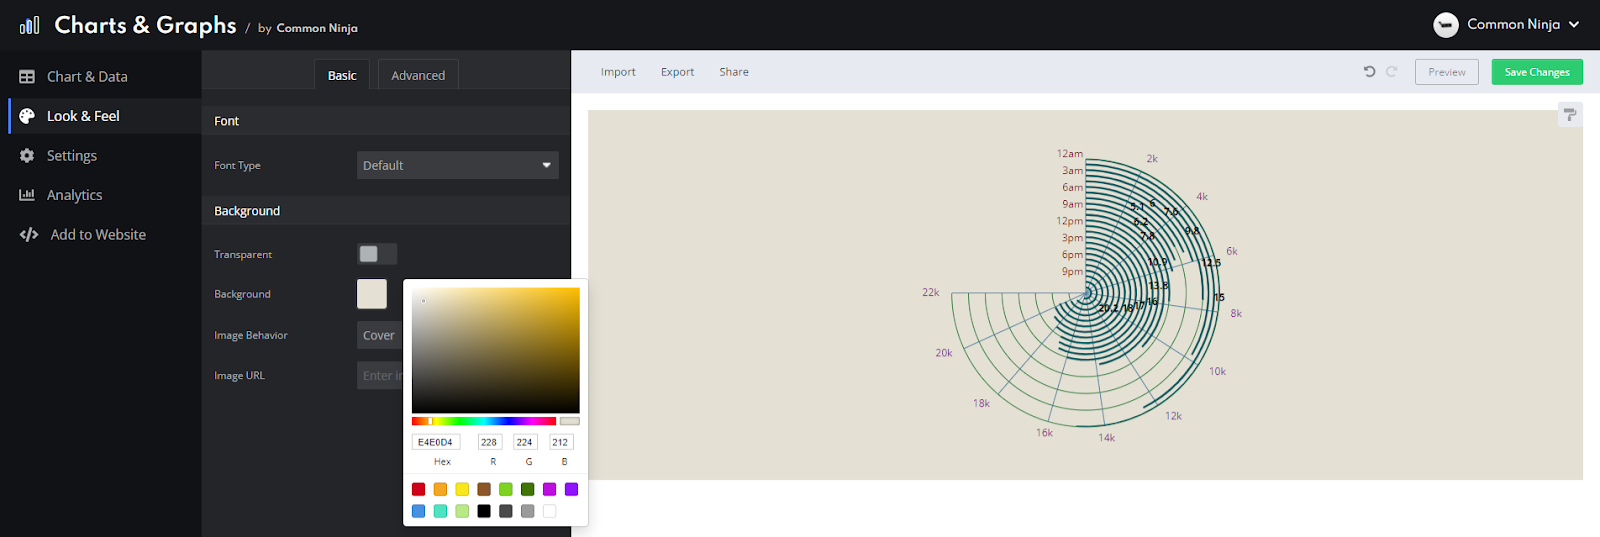 a screenshot of common ninja's charts & graphs app